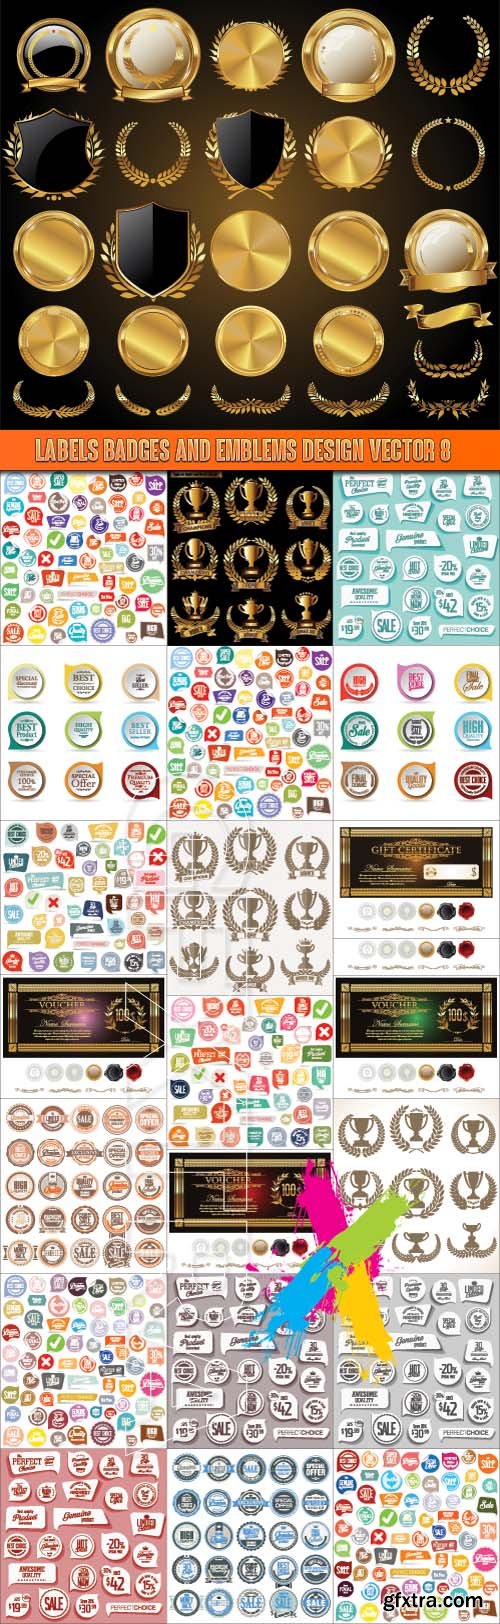 Labels badges and emblems design vector 8